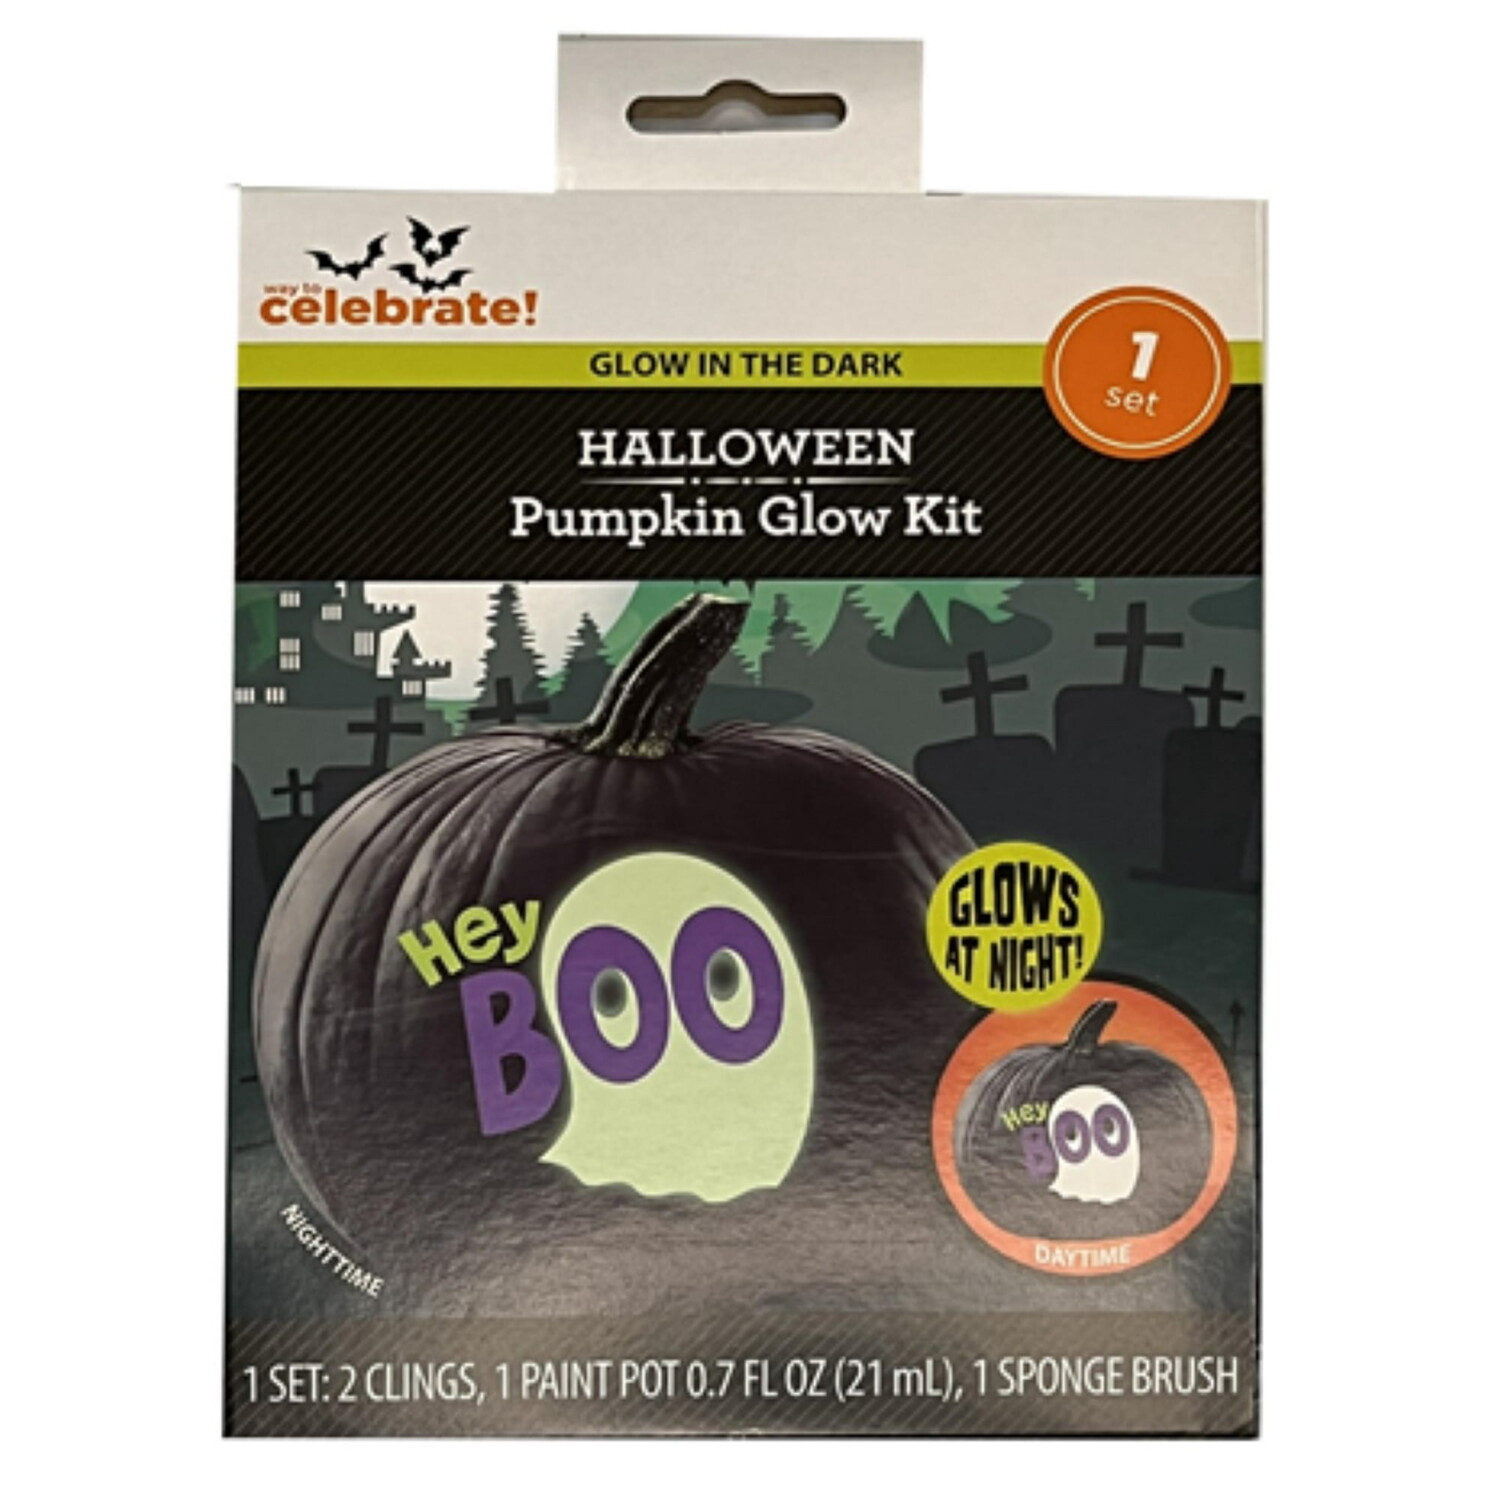 Halloween Pumpkin Glow Kit, Hey Boo